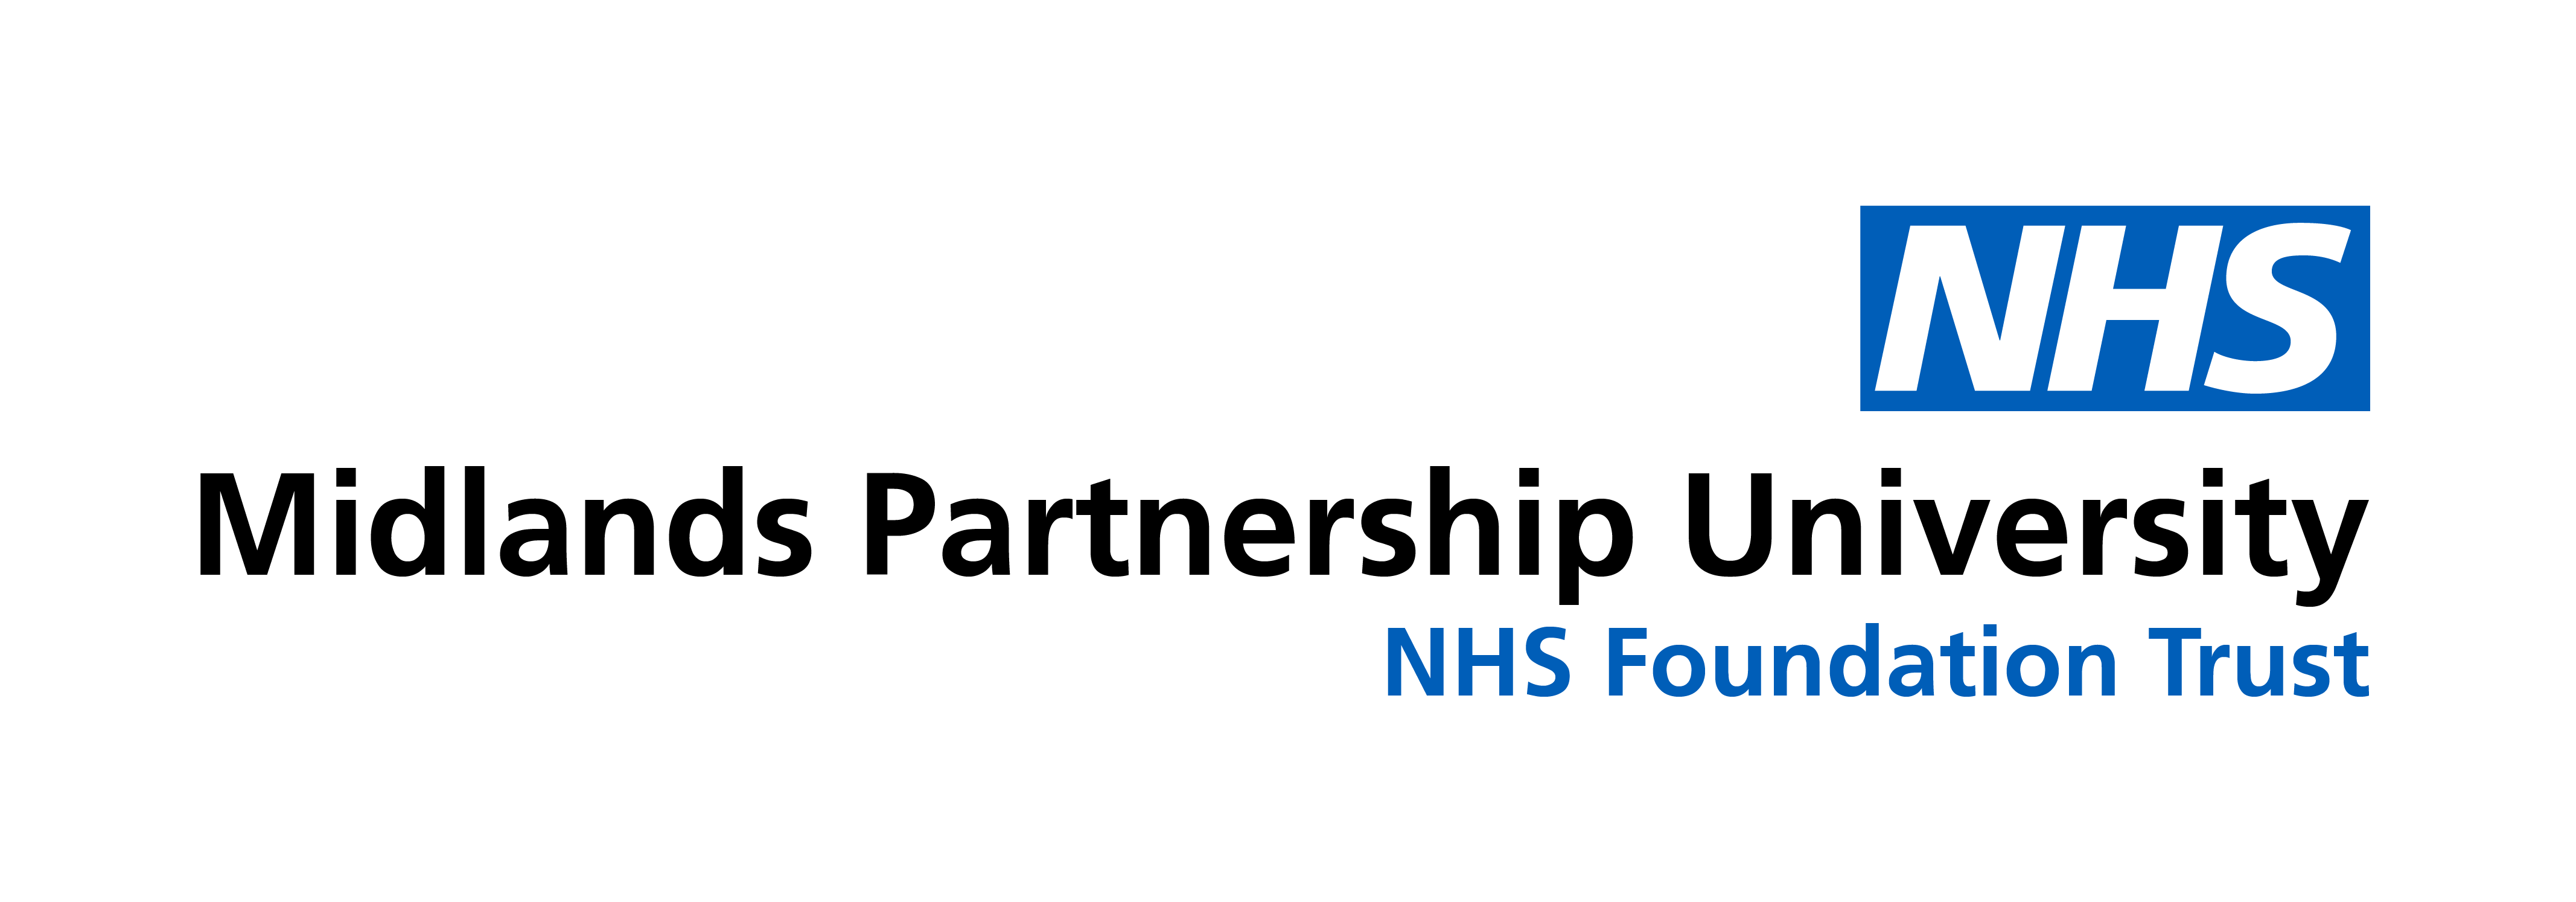 Midlands Partnership University NHS FT logo